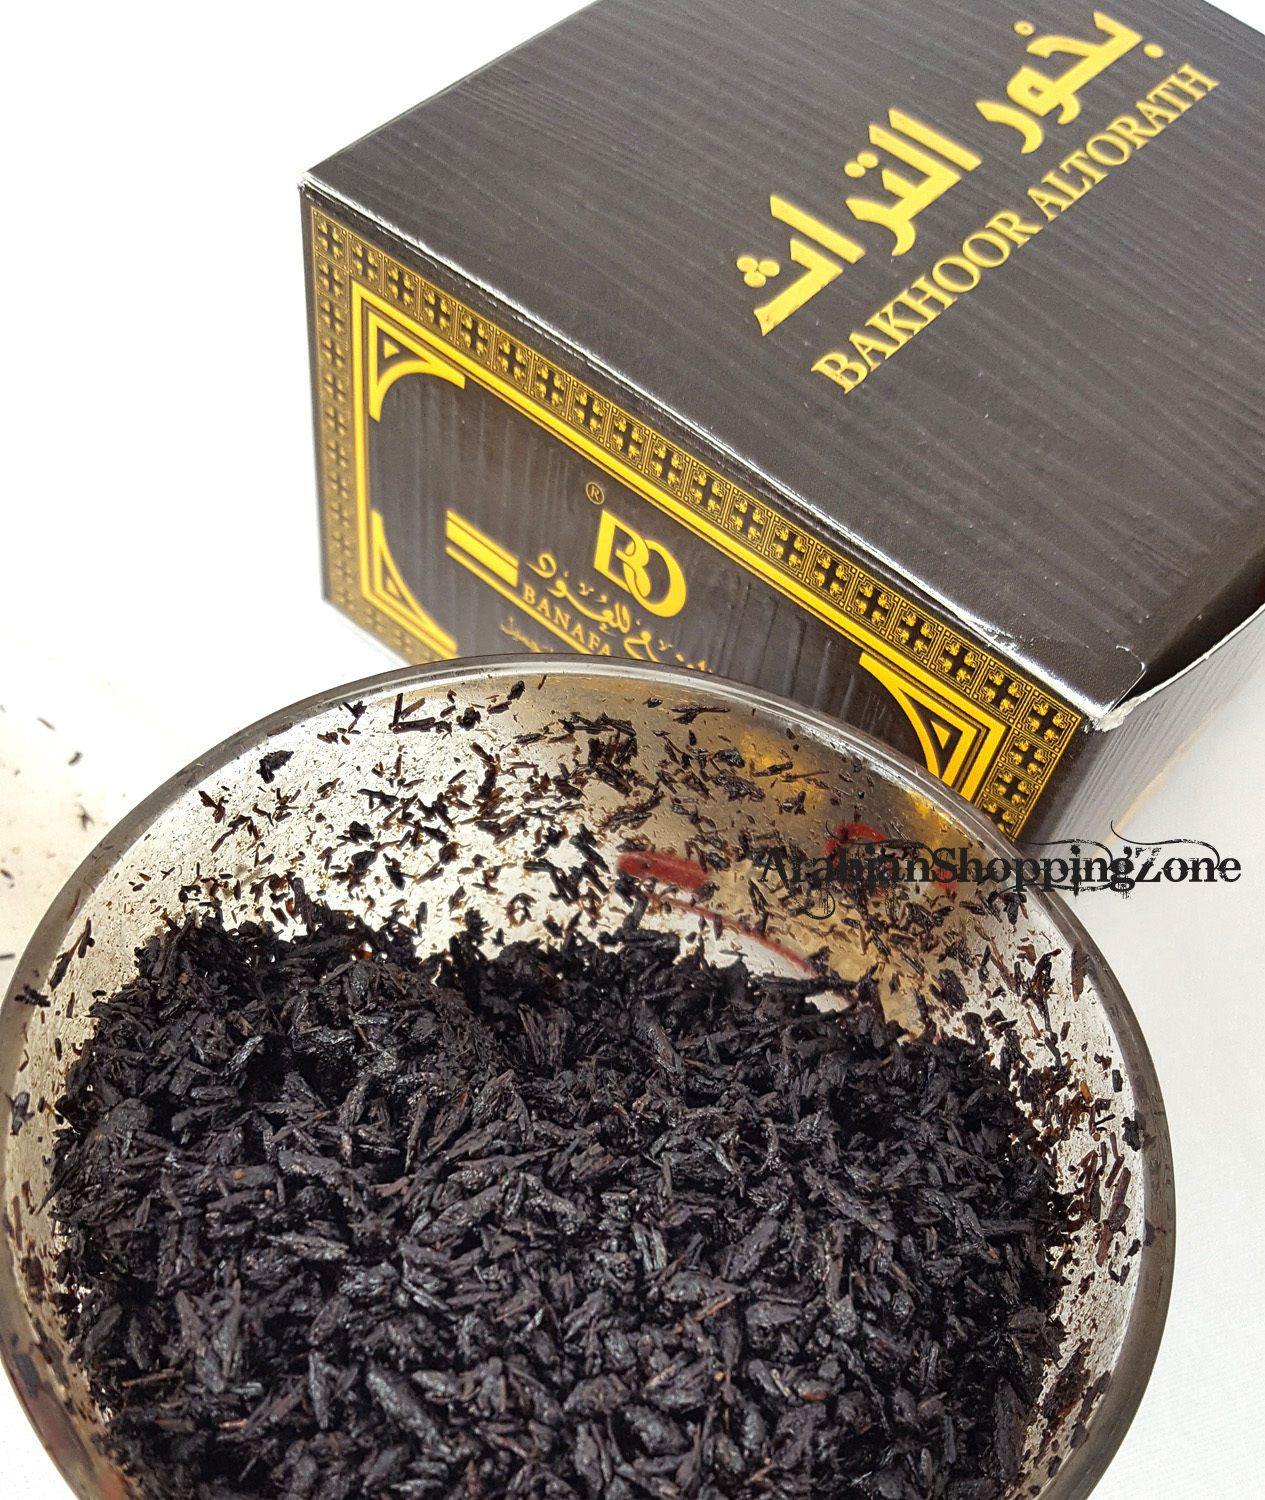 Banafa Arabian Incense BAKHOOR Fragrance